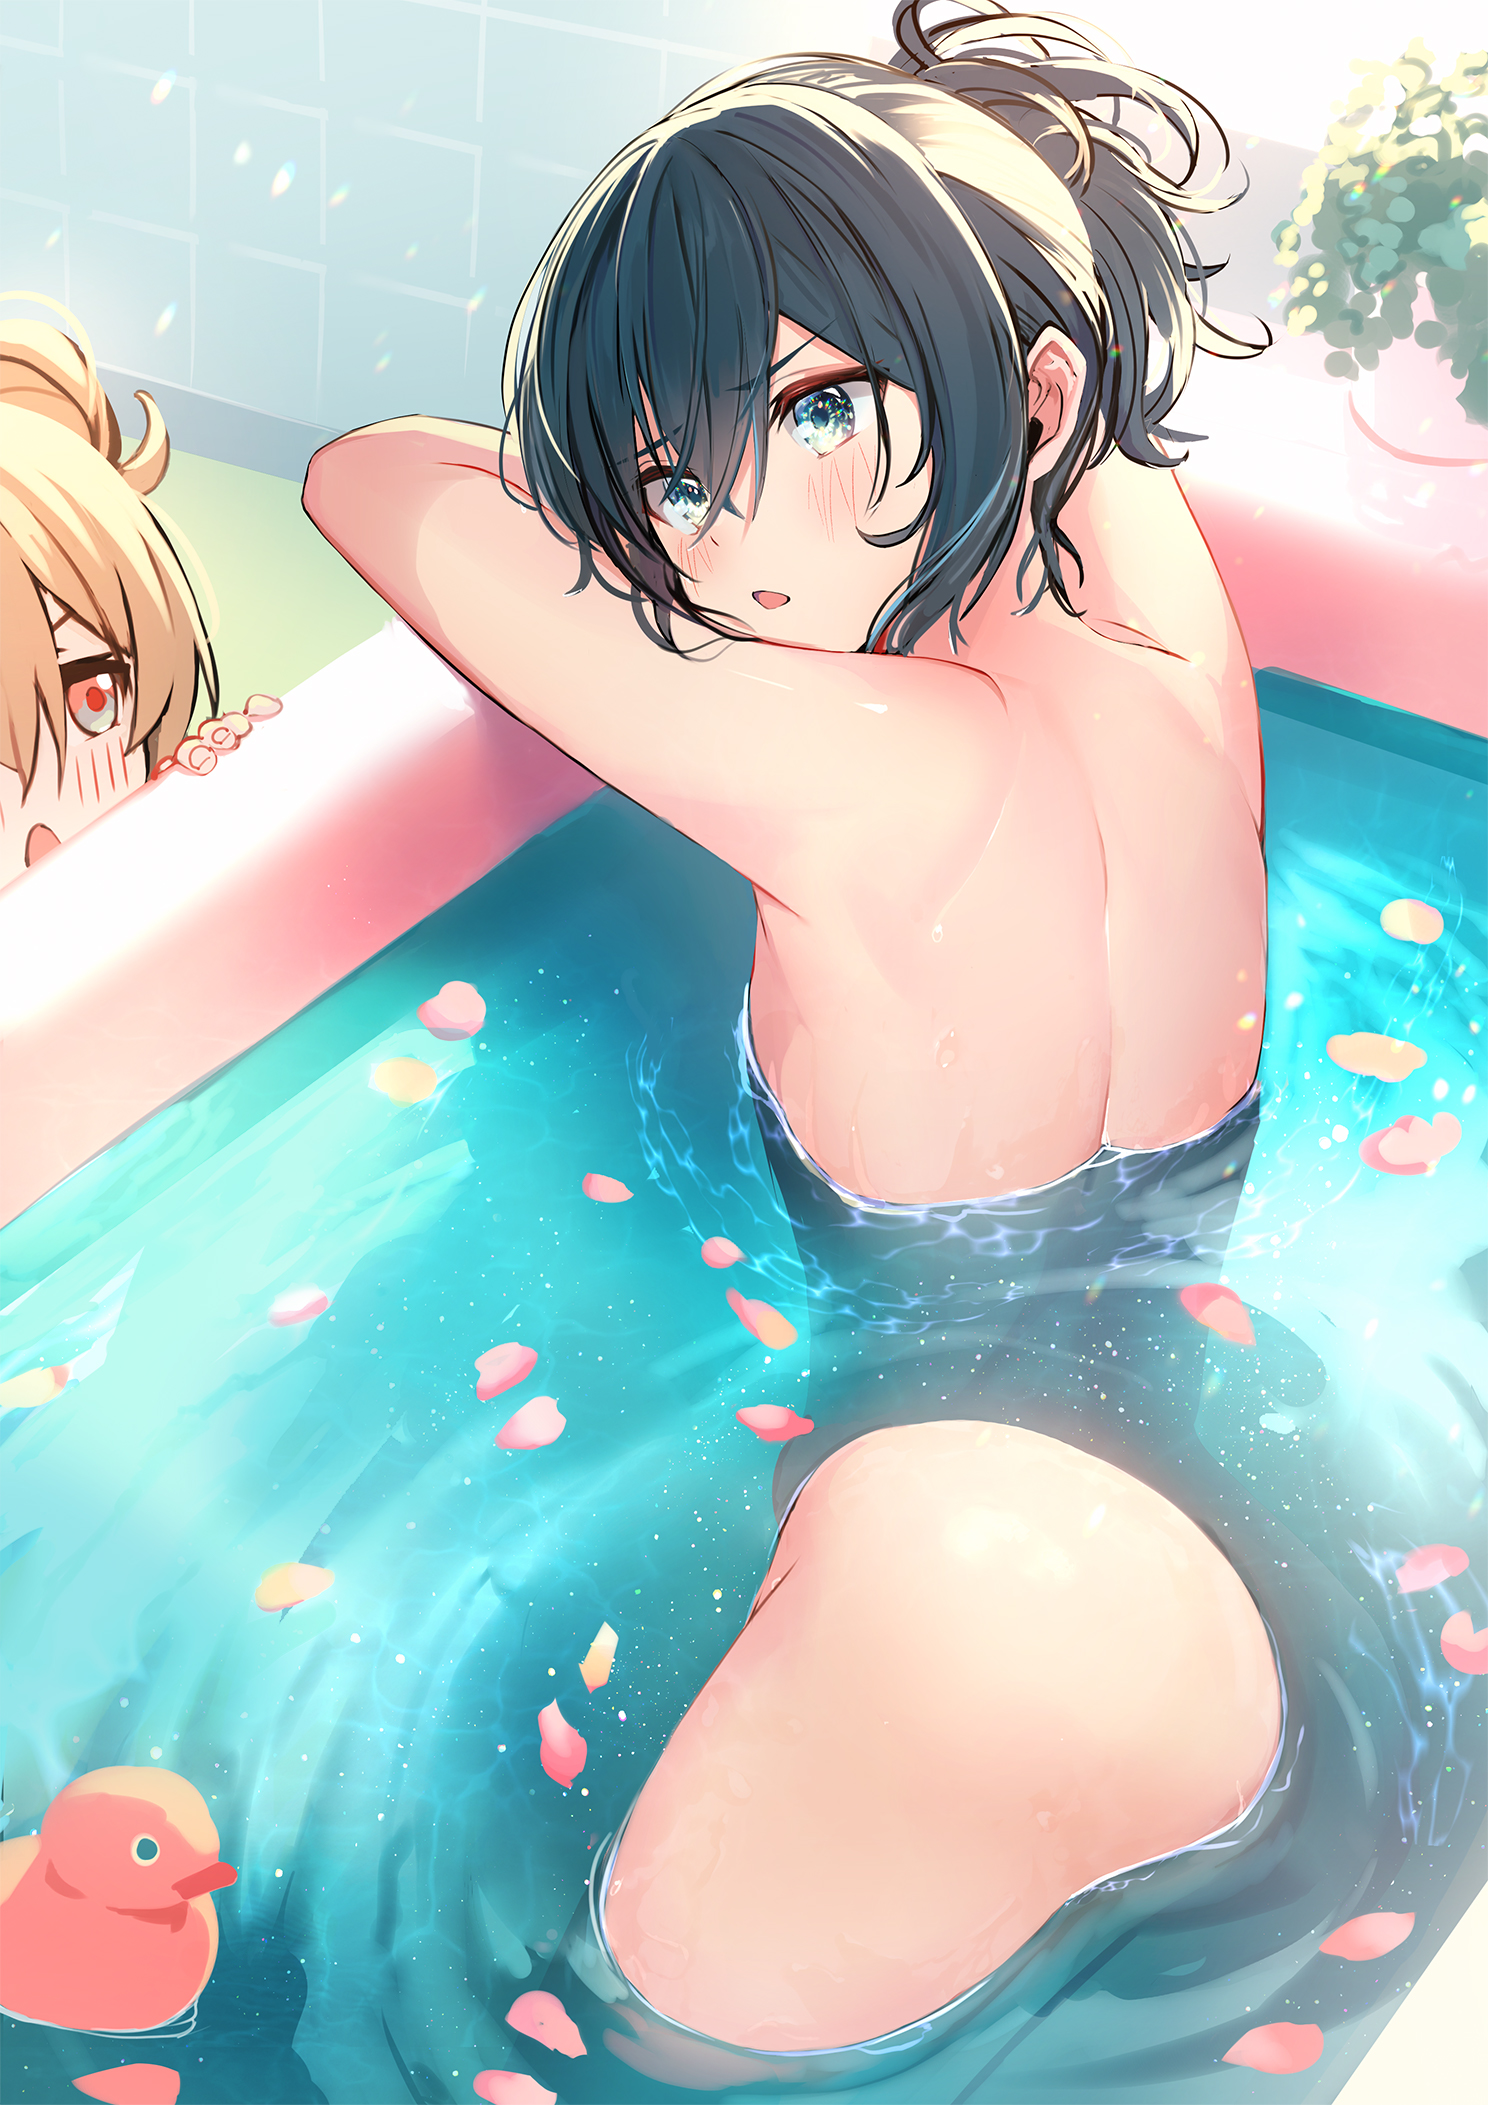 Anime 1488x2105 anime anime girls digital art artwork 2D portrait display Kagawa Ichigo black hair blushing in bathtub petals nude small boobs